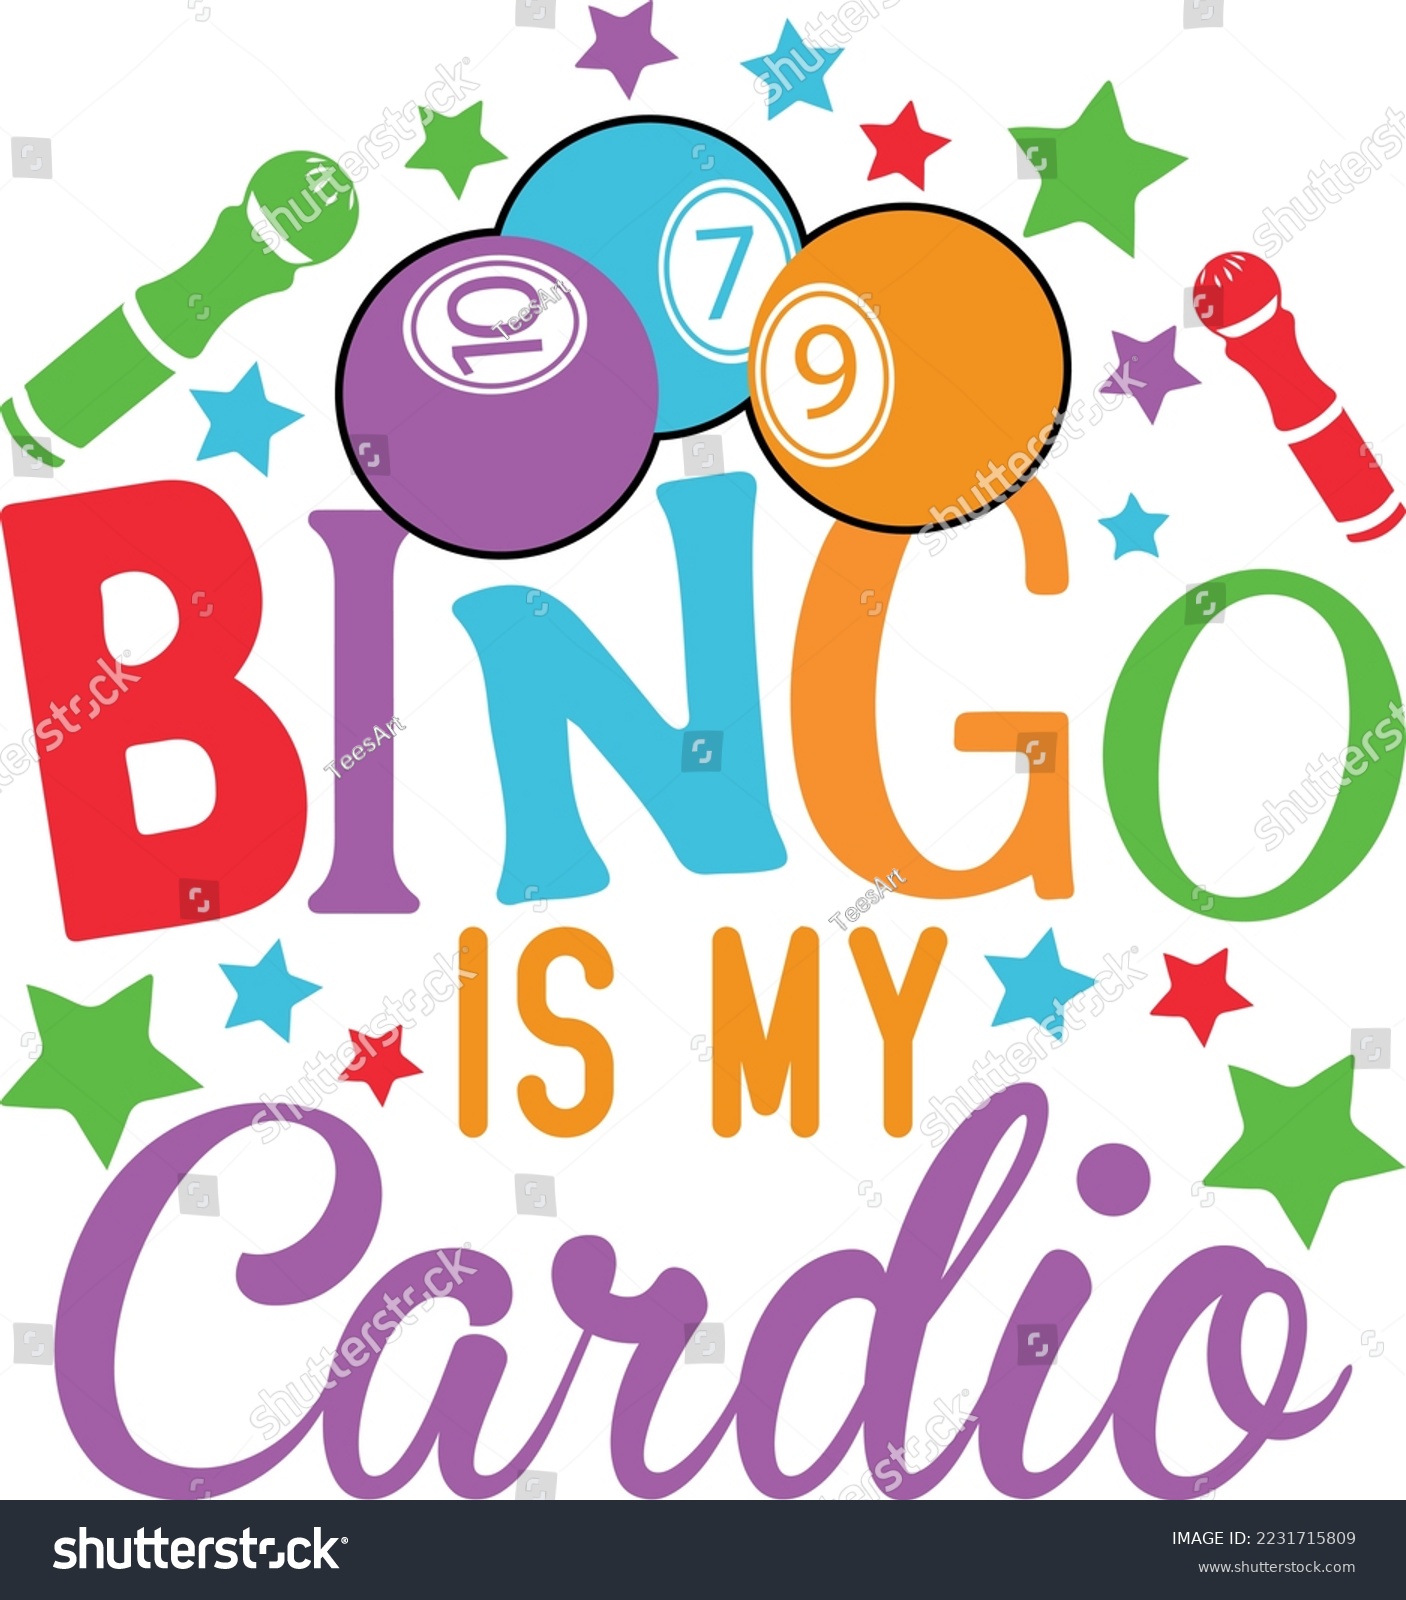 SVG of Bingo is cardio svg design, bingo, games, crazy bingo, squad, svg